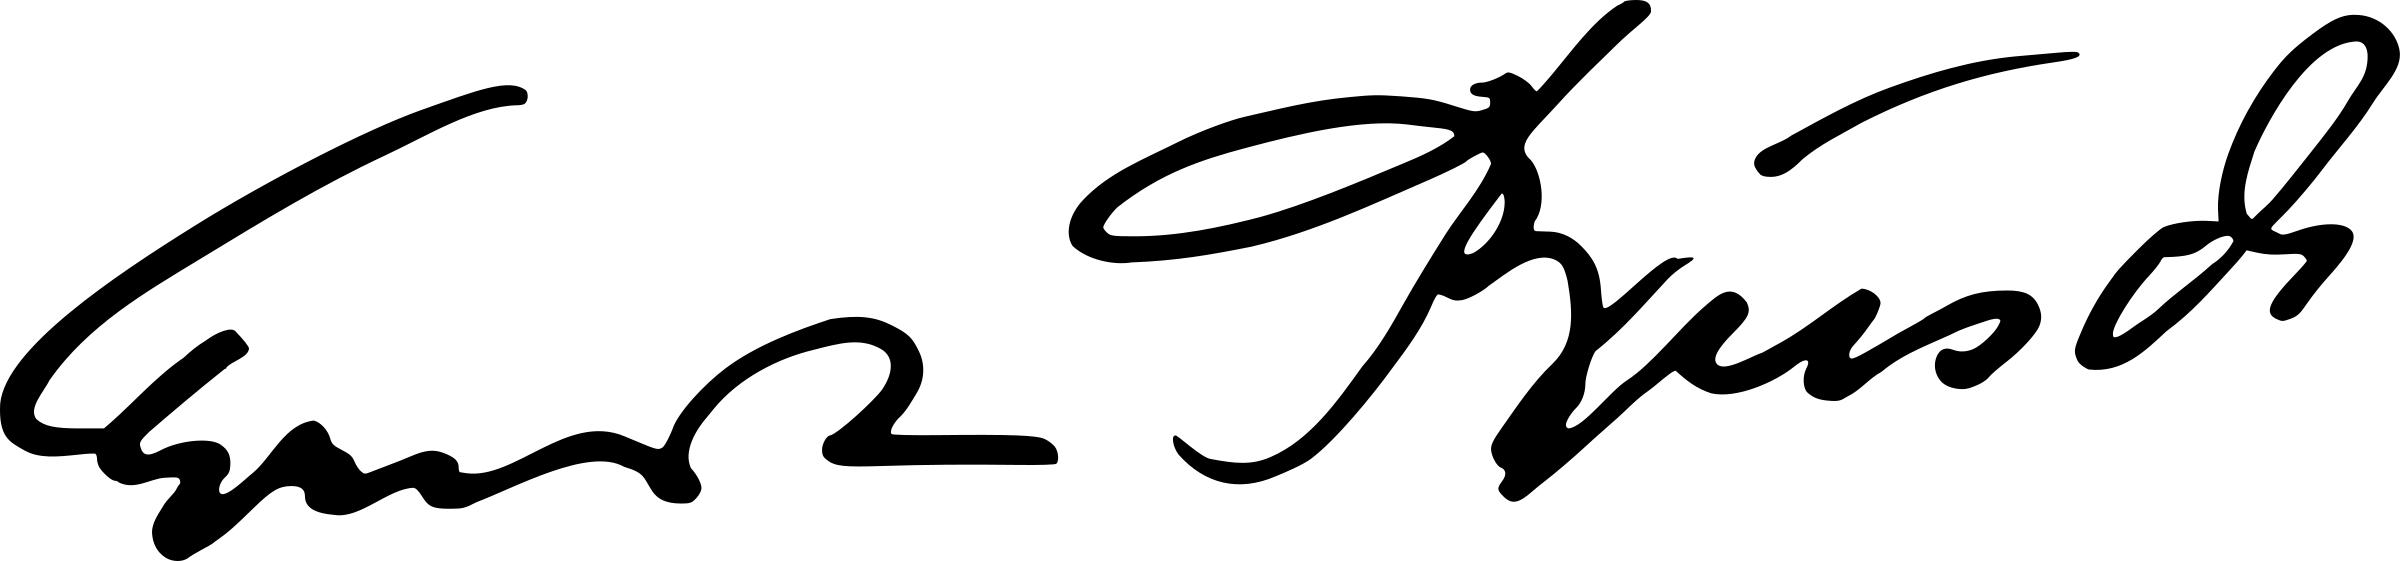 Ernst Busch Signature png